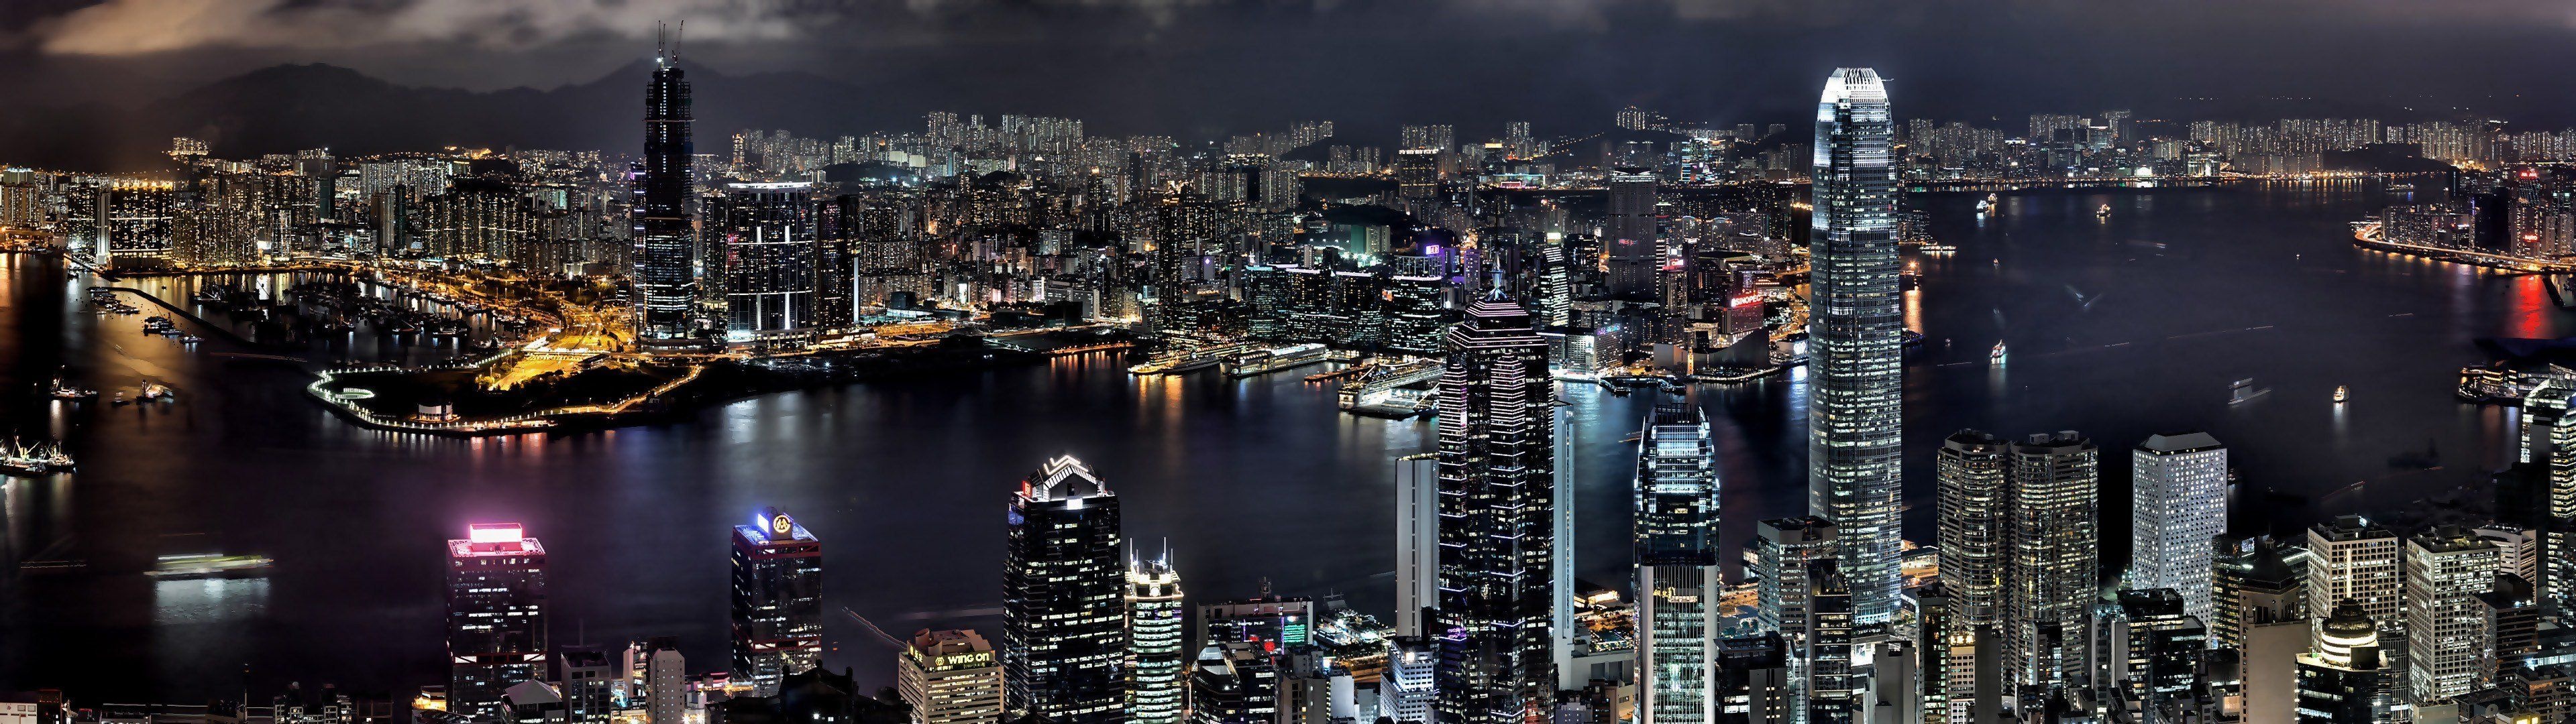 City: Hong Kong at night, International Commerce Centre, Two International Finance Centre, Special region in China. 3840x1080 Dual Screen Background.